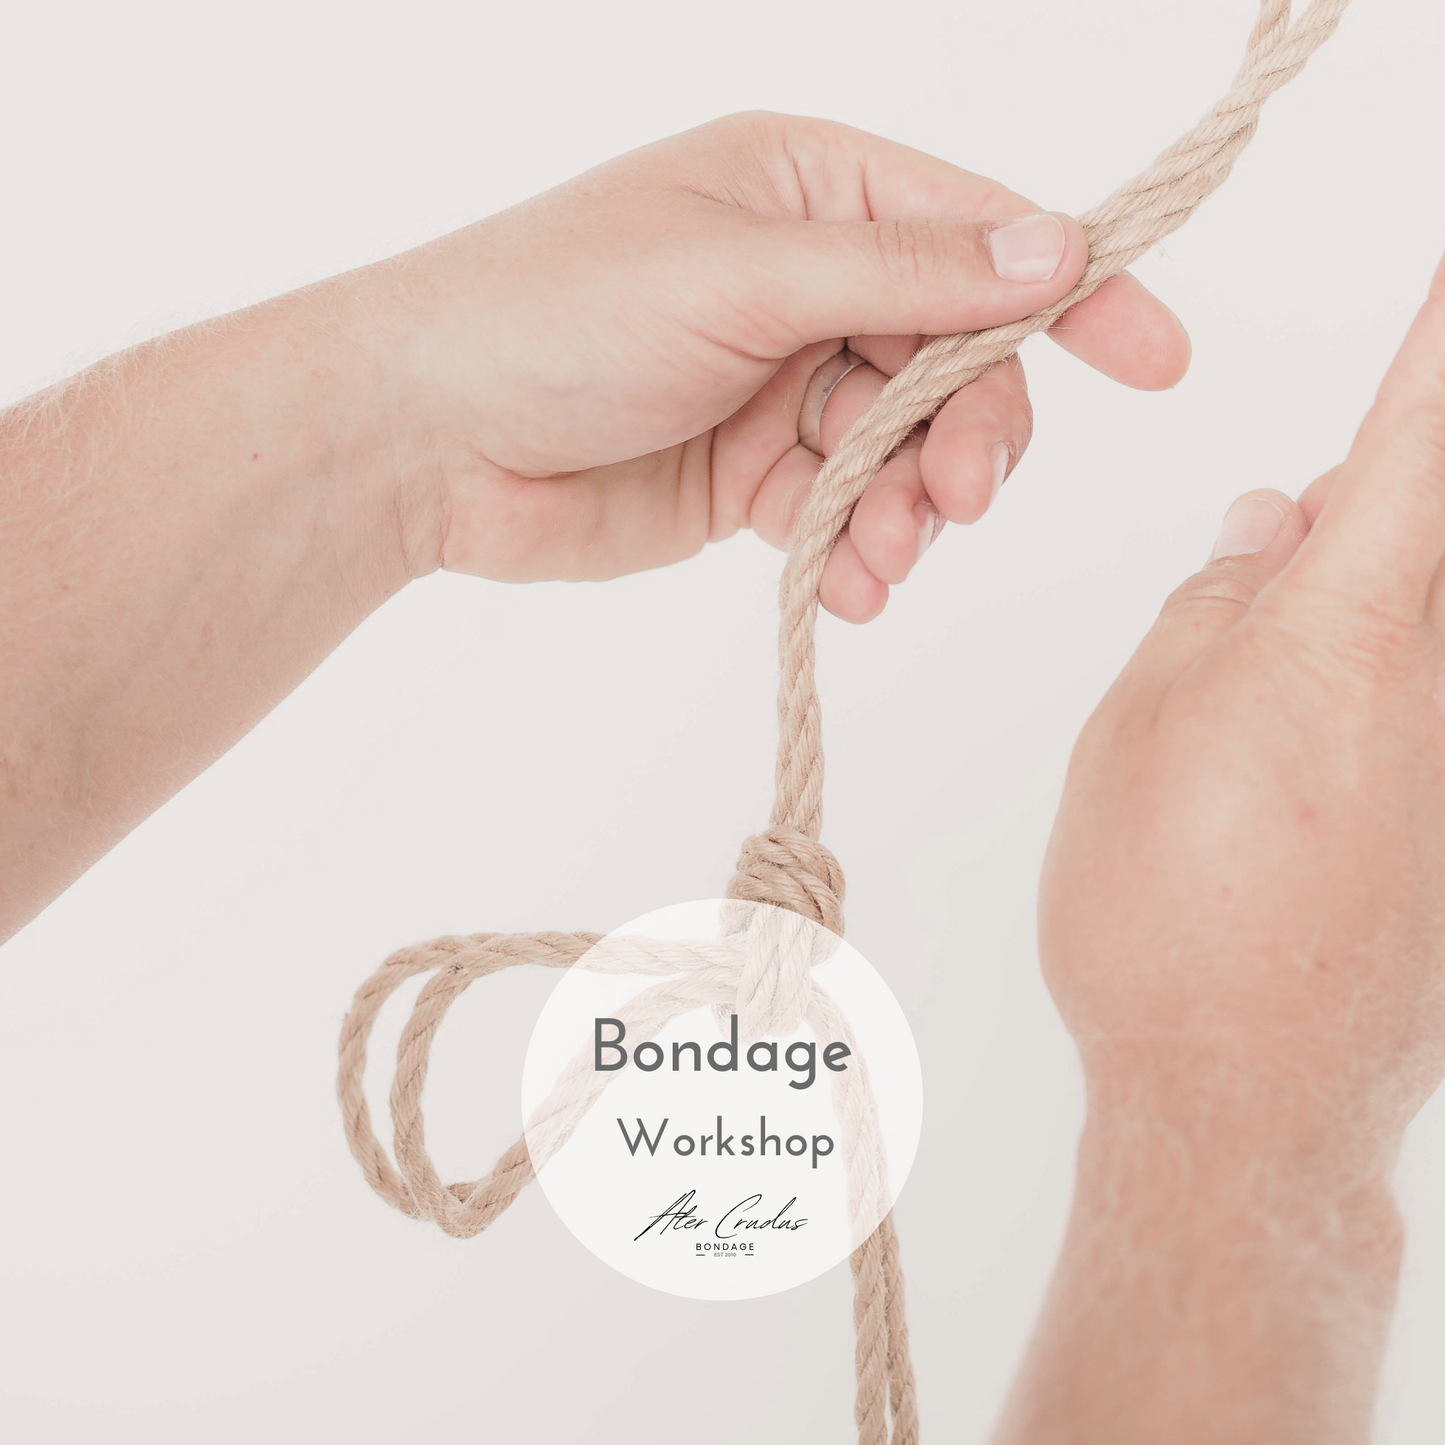 Seile Bondage Bondage Workshop 180 Minuten Fesseln lernen Bondage Tutorial Knoten Ater Crudus